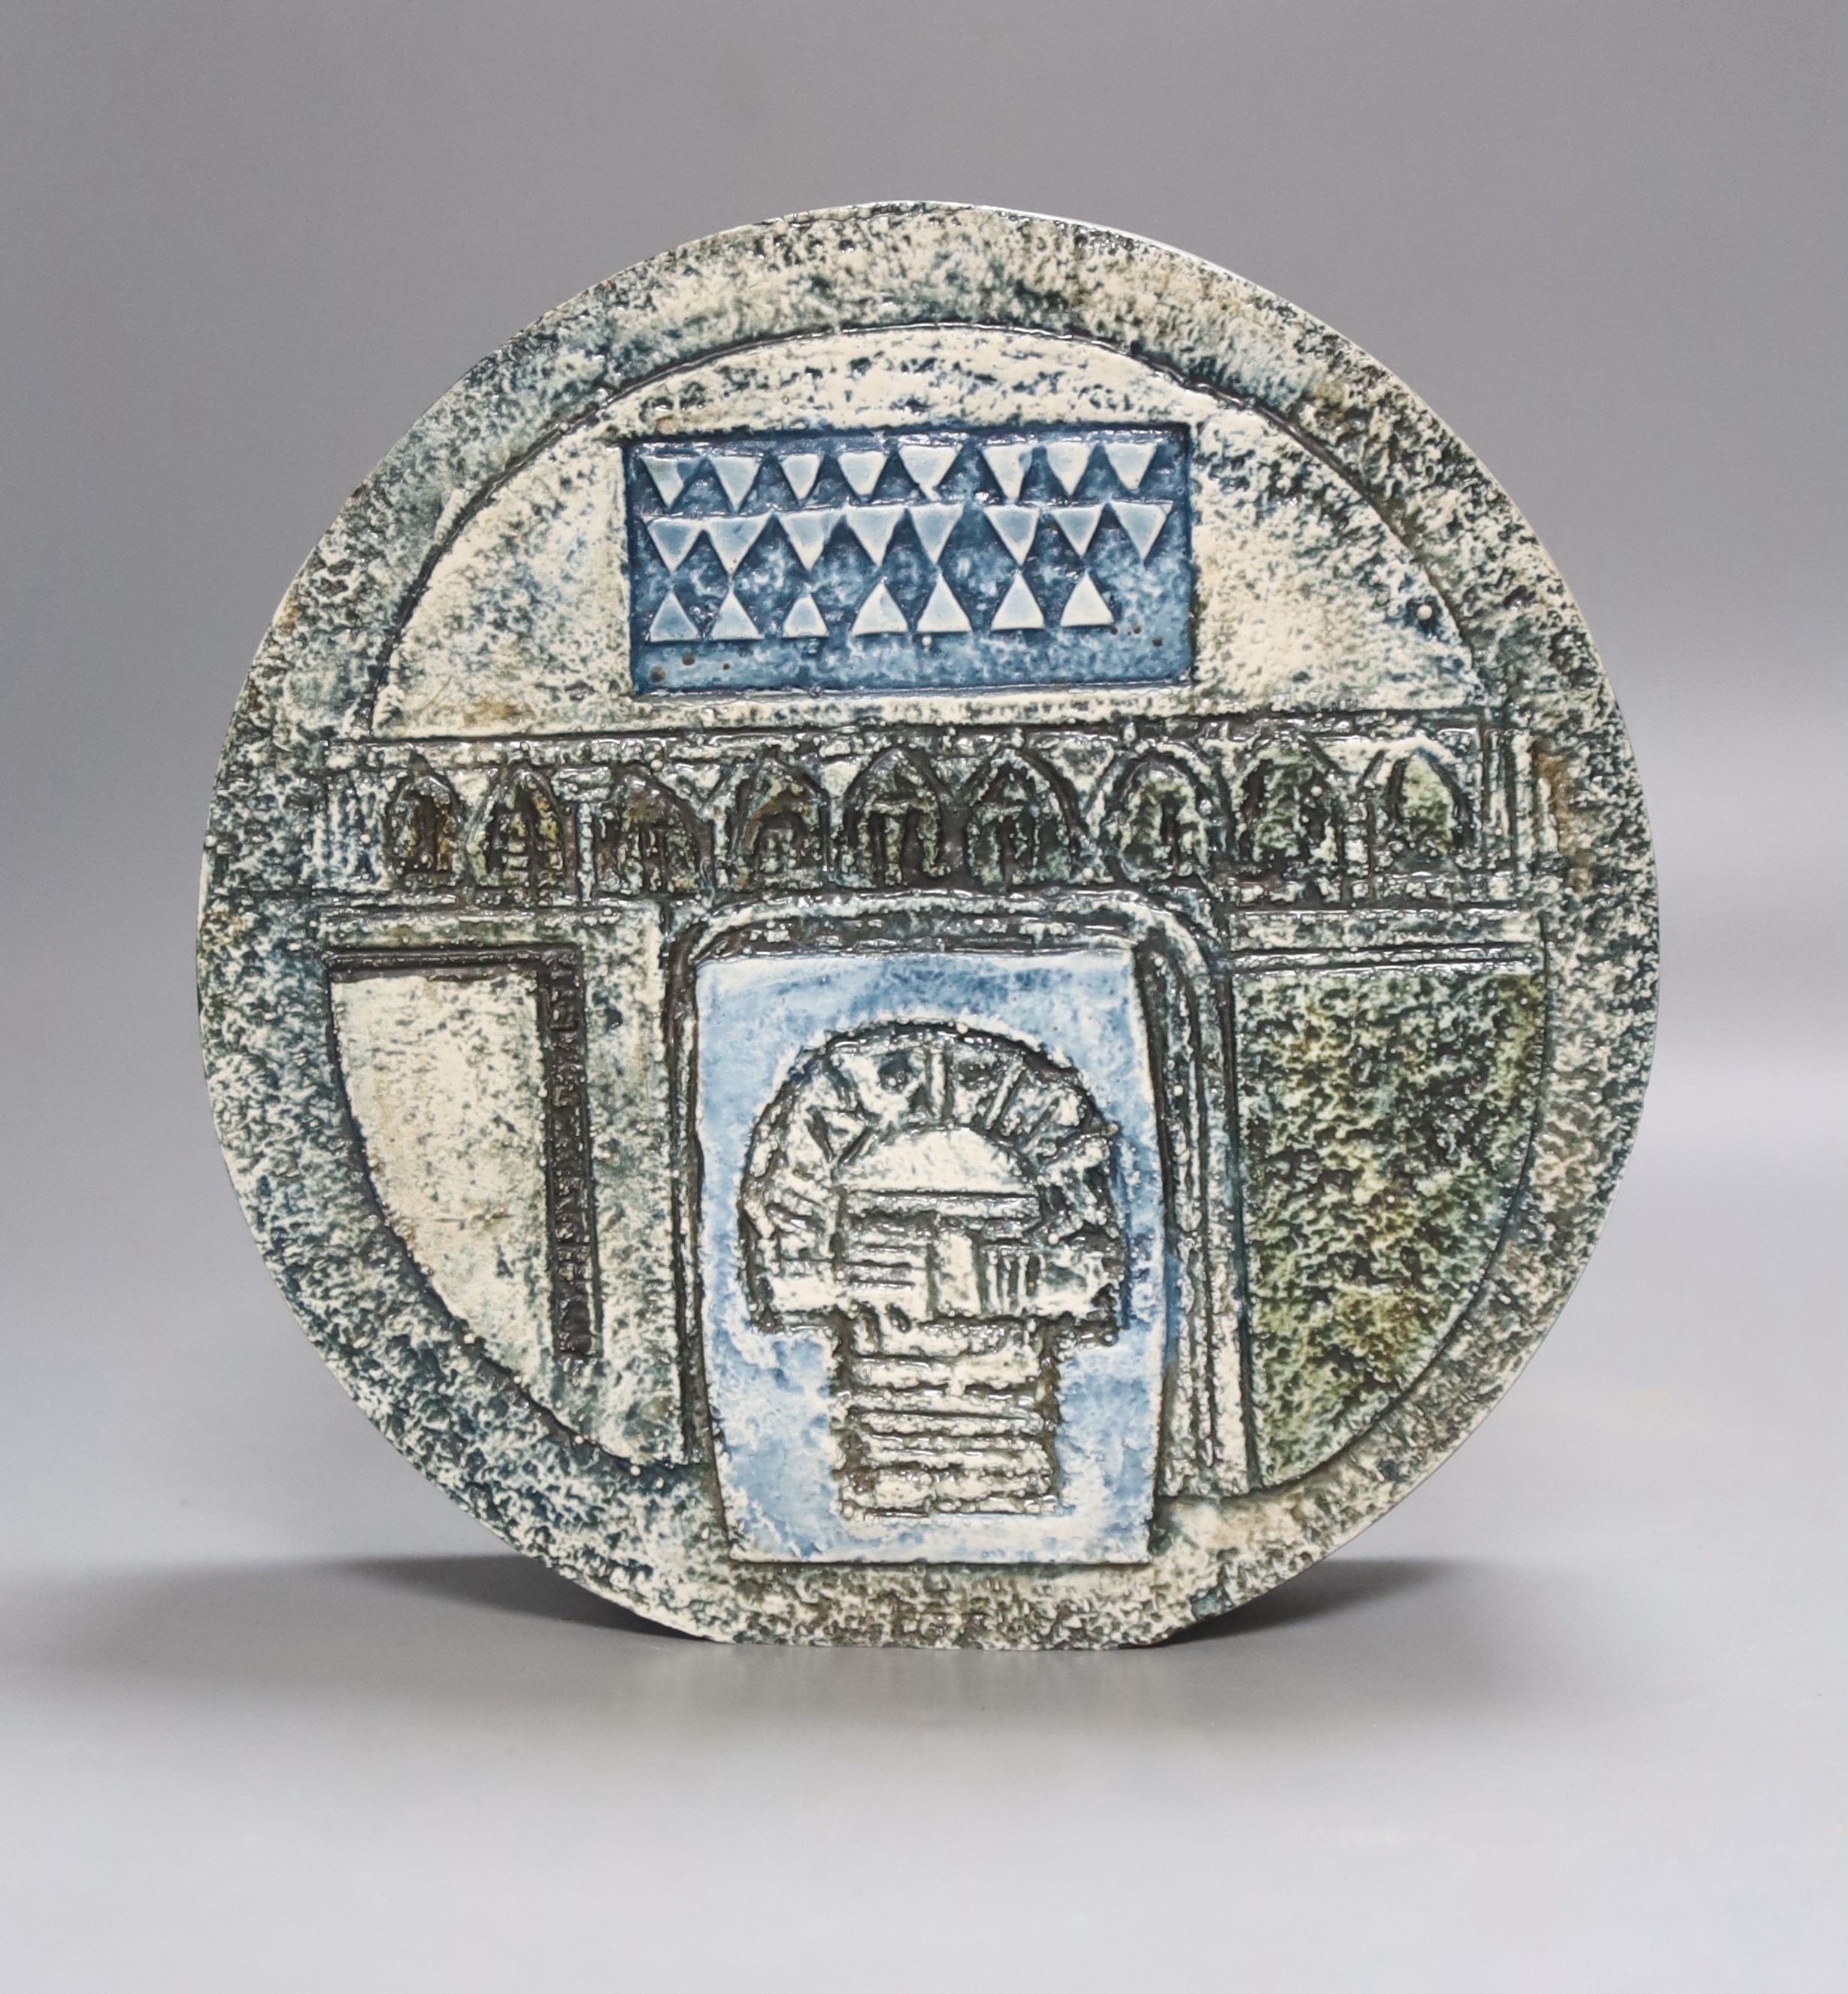 A Troika wheel vase of Aztec design by Linda Taylor, blue-grey colourway H 20cm